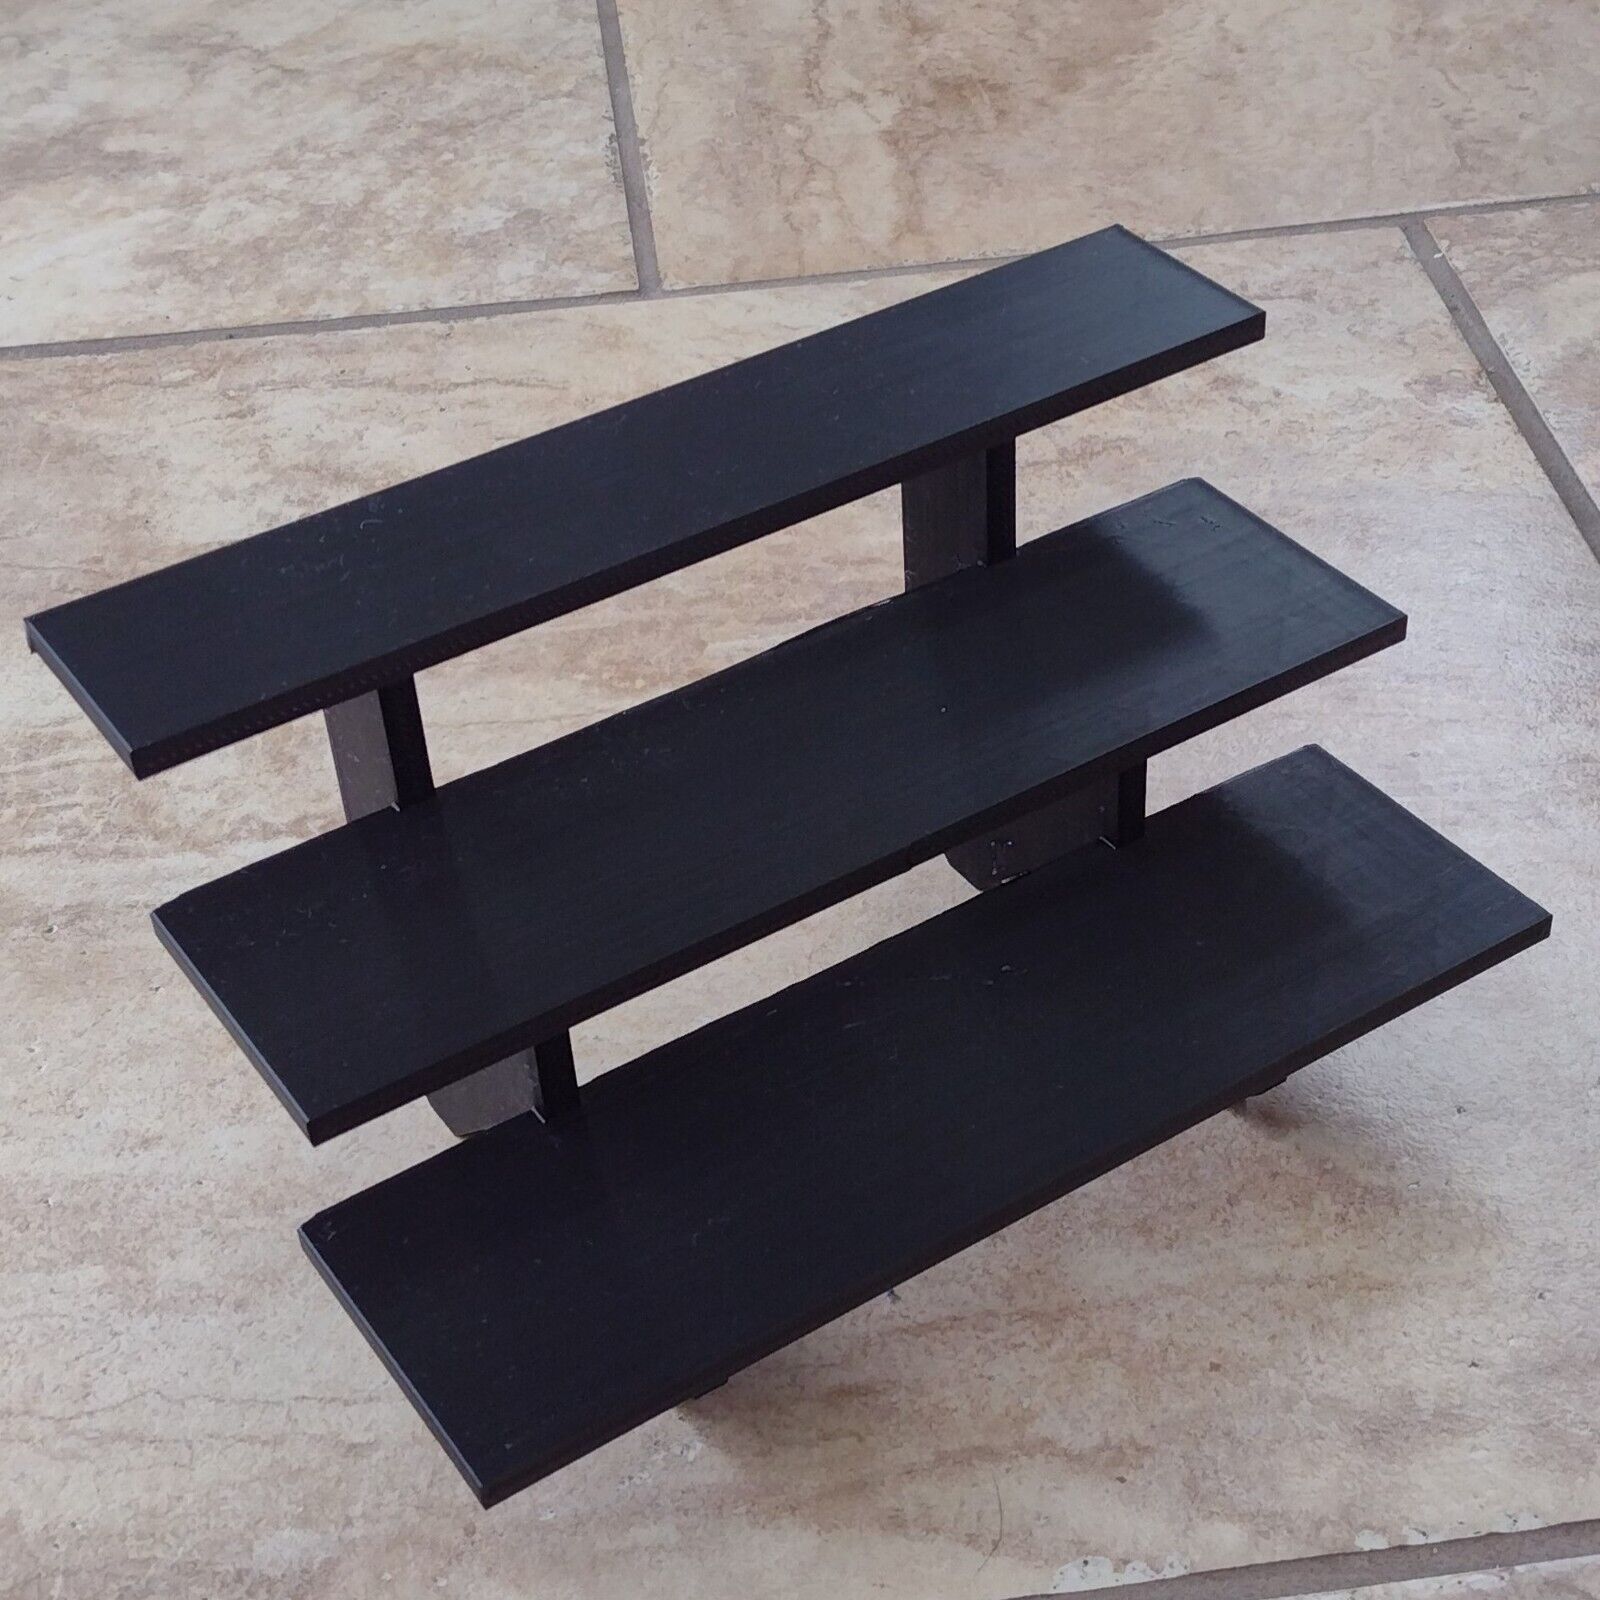 10 inch 3-Tier Black Figurine Display Shelf / Stand with Equal Length Shelves